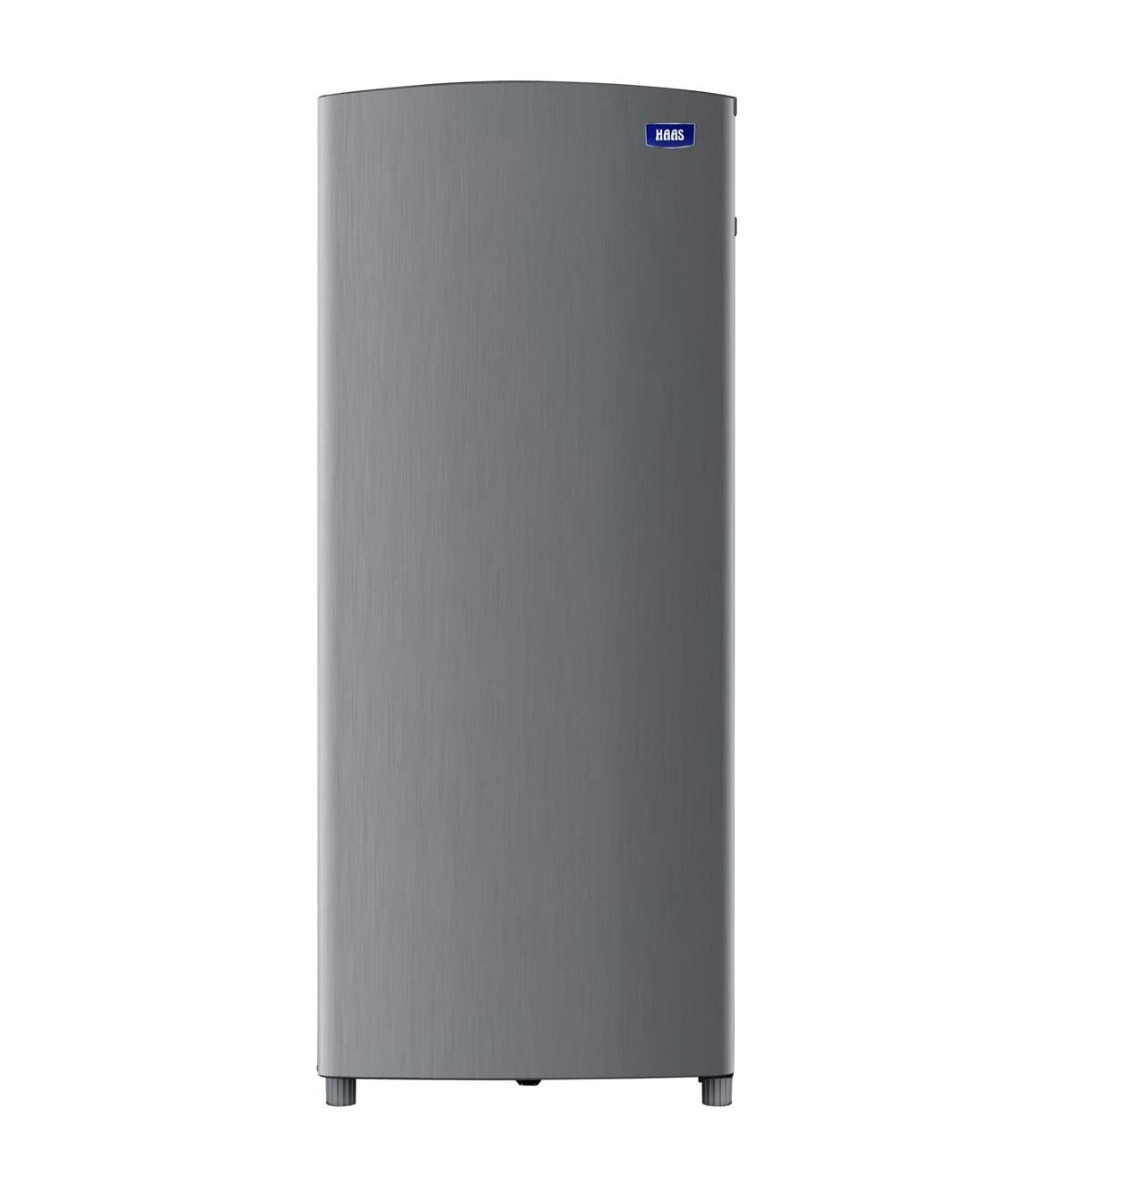 HAAS Single Door Refrigerator, 6.2 ft / 176 Ltr, with Adjustable Shelves, Silver - HRK109S 